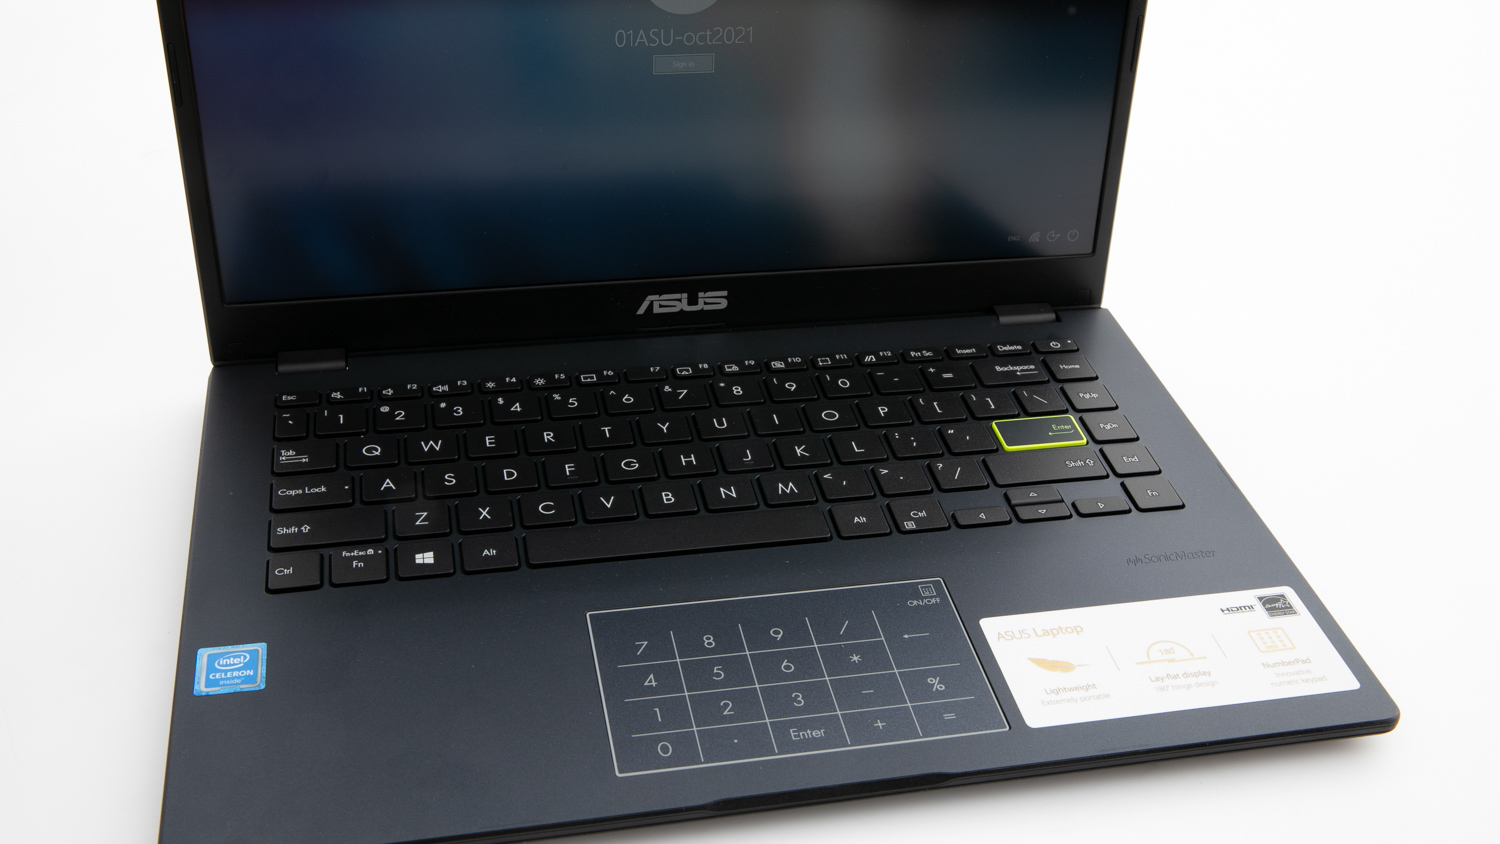 Asus E410m E410ma Ek005ts Review Laptop And Tablet Choice 6042